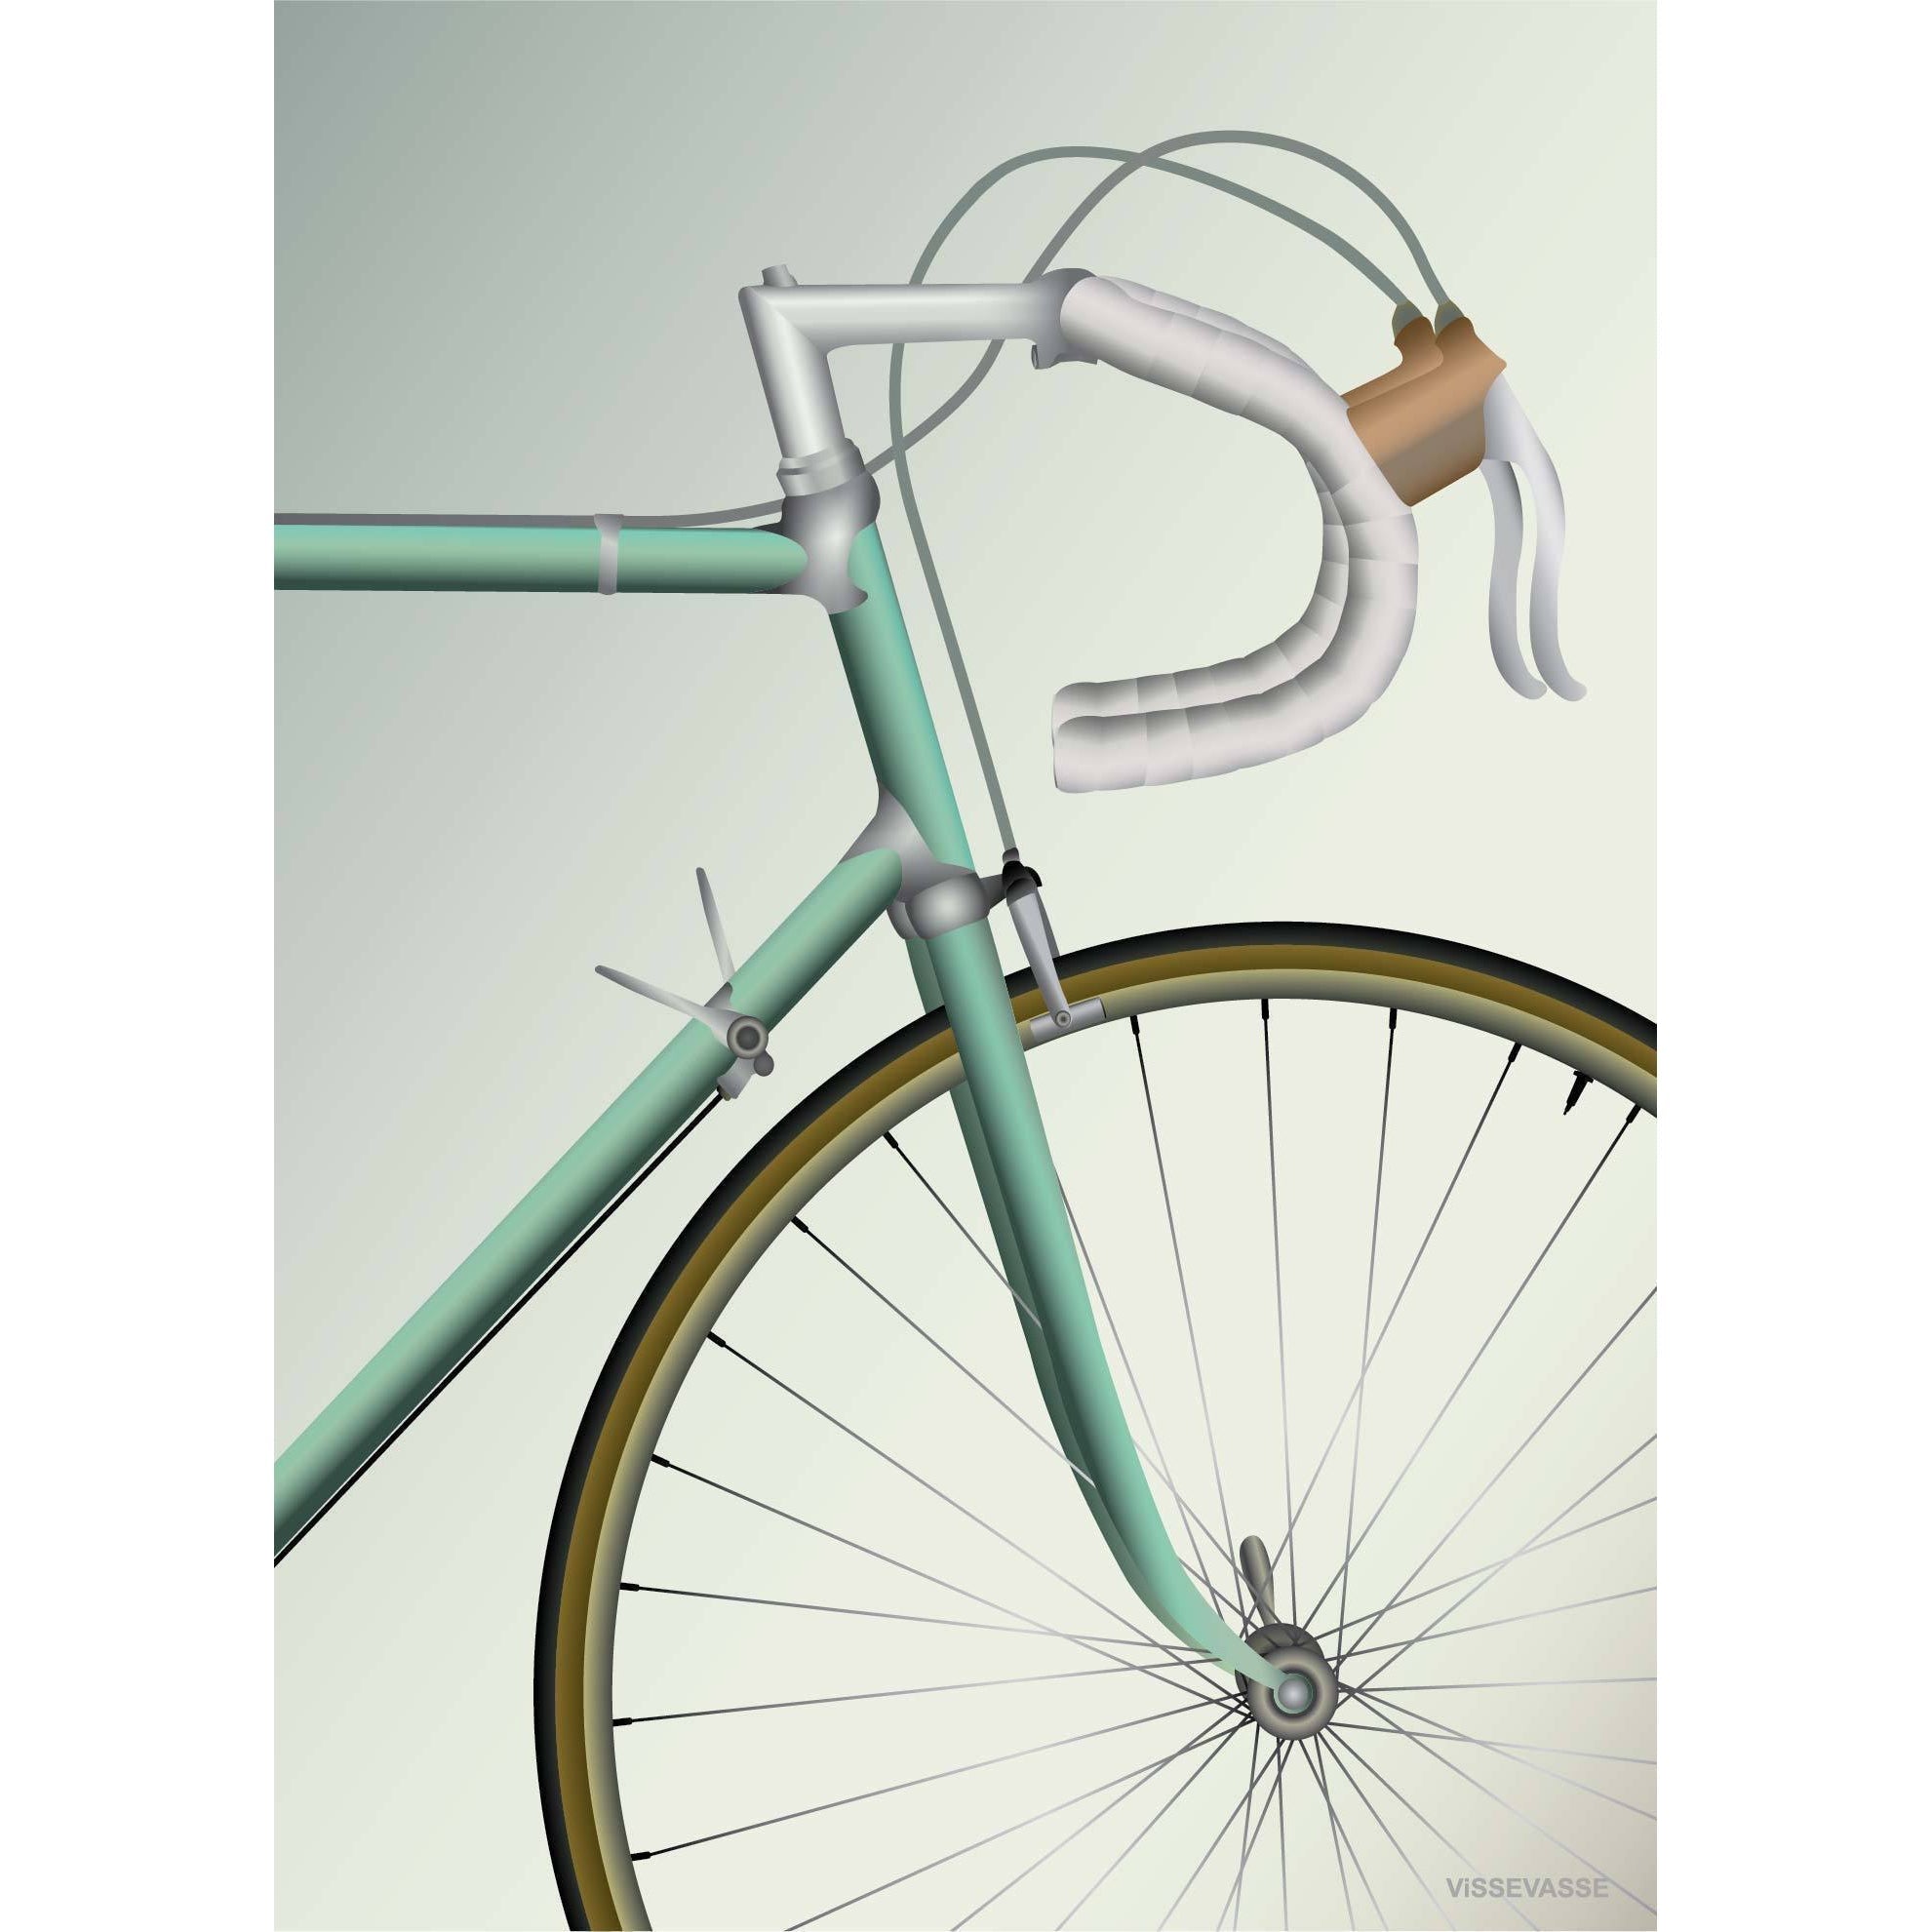 Vissevasse Road Bike veggspjald, 15 x21 cm